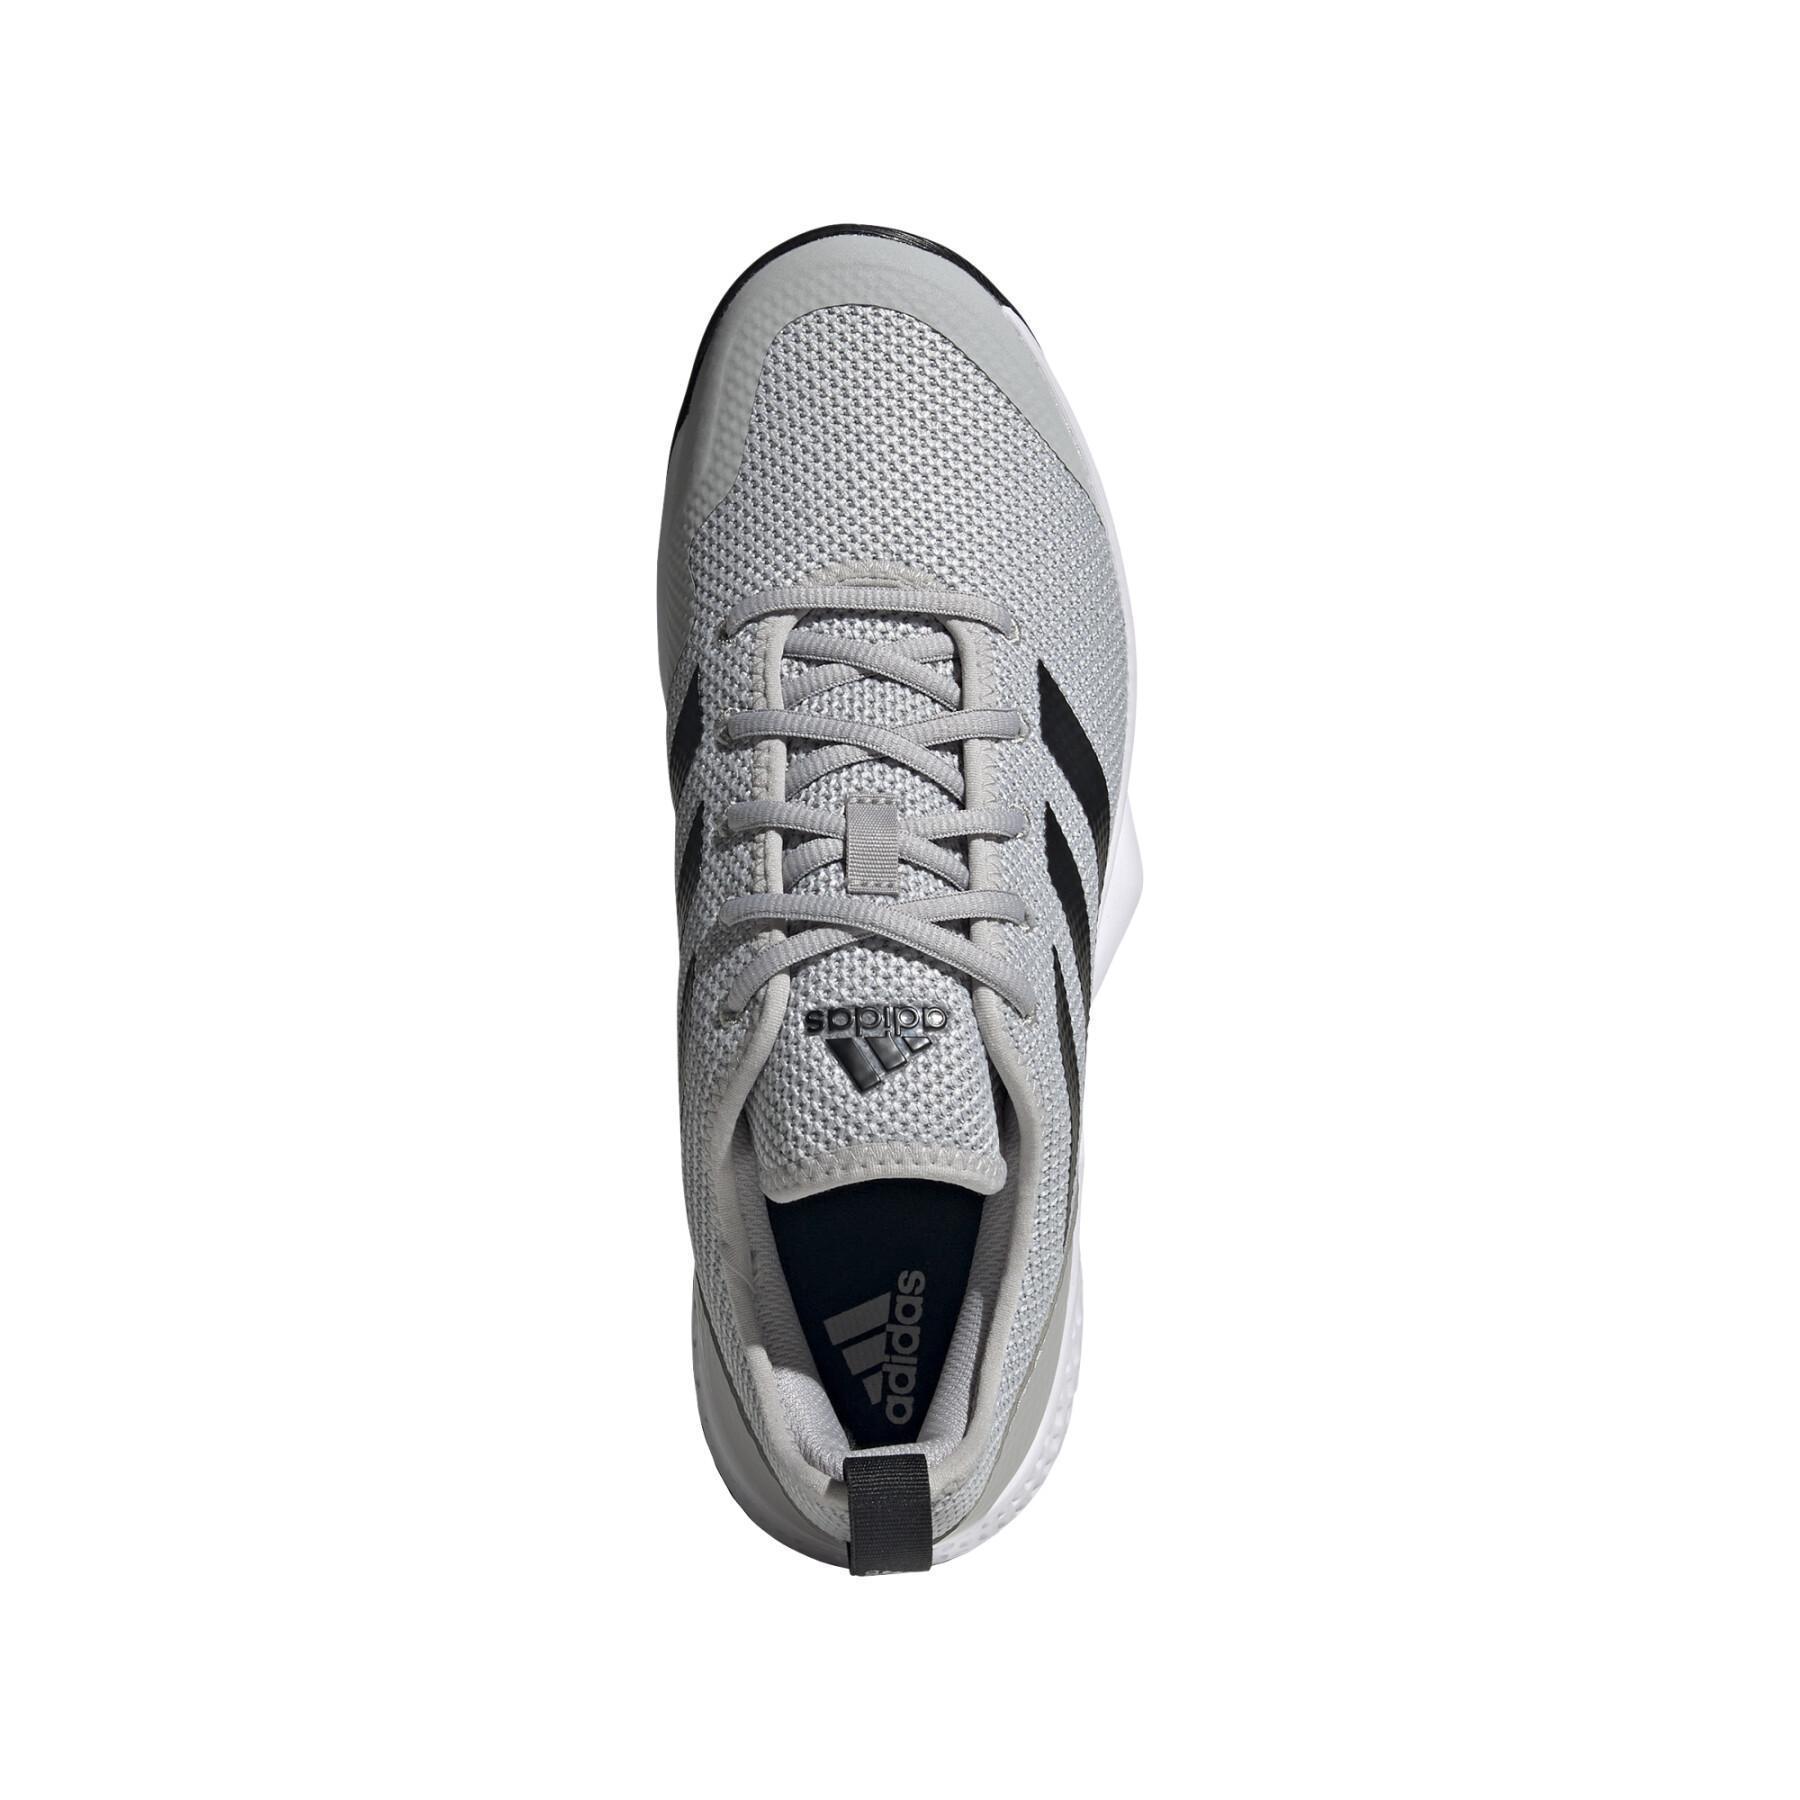 Tennis shoes adidas Multi-court